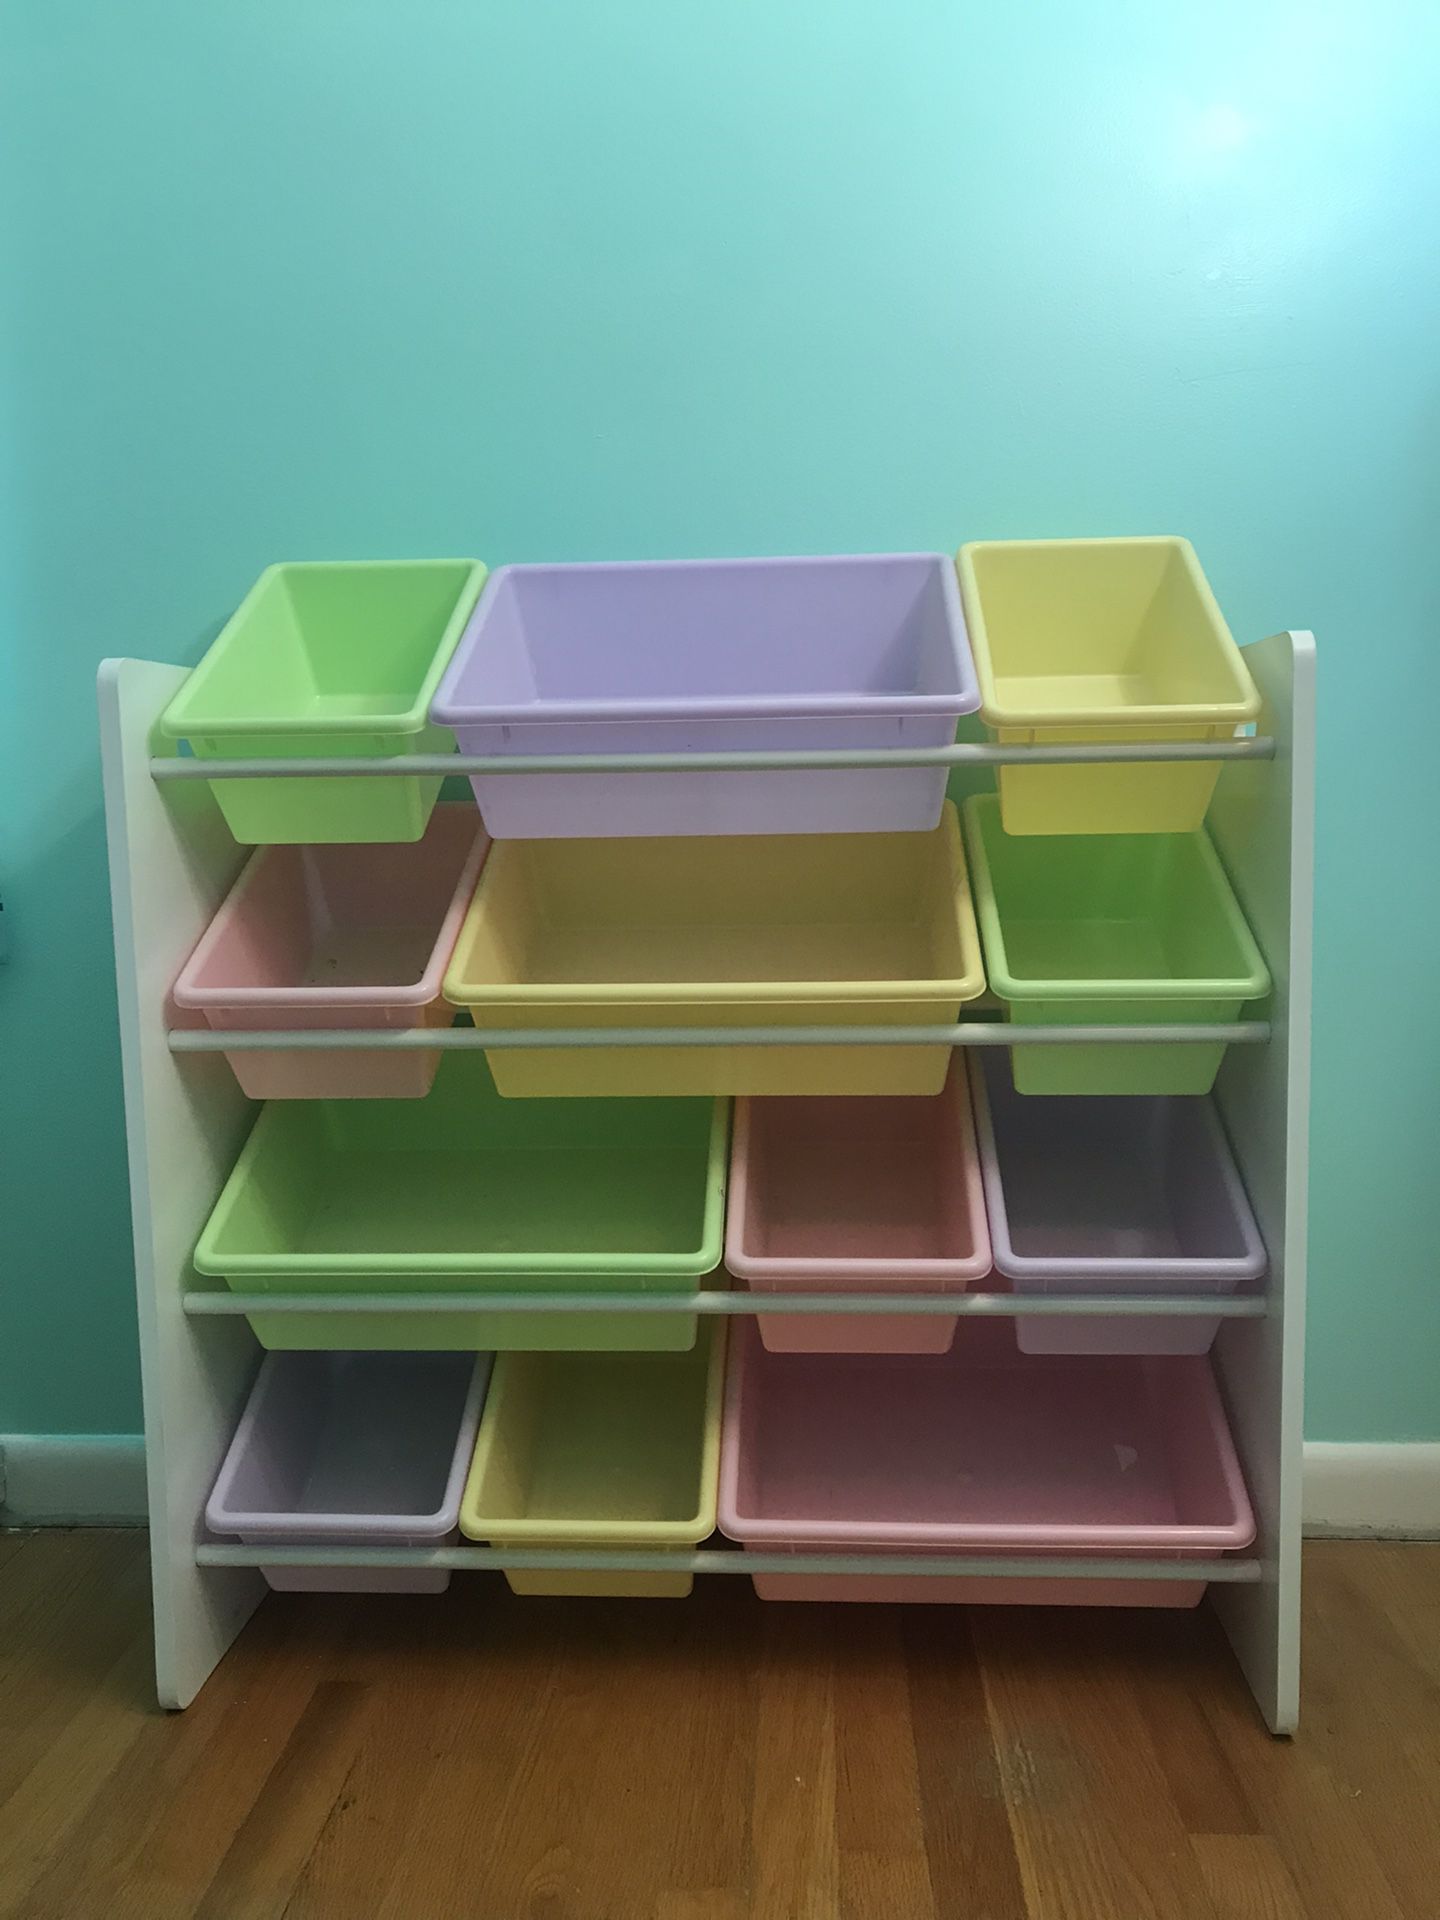 Kids Toy Storage Organizer With Bins, Pastel